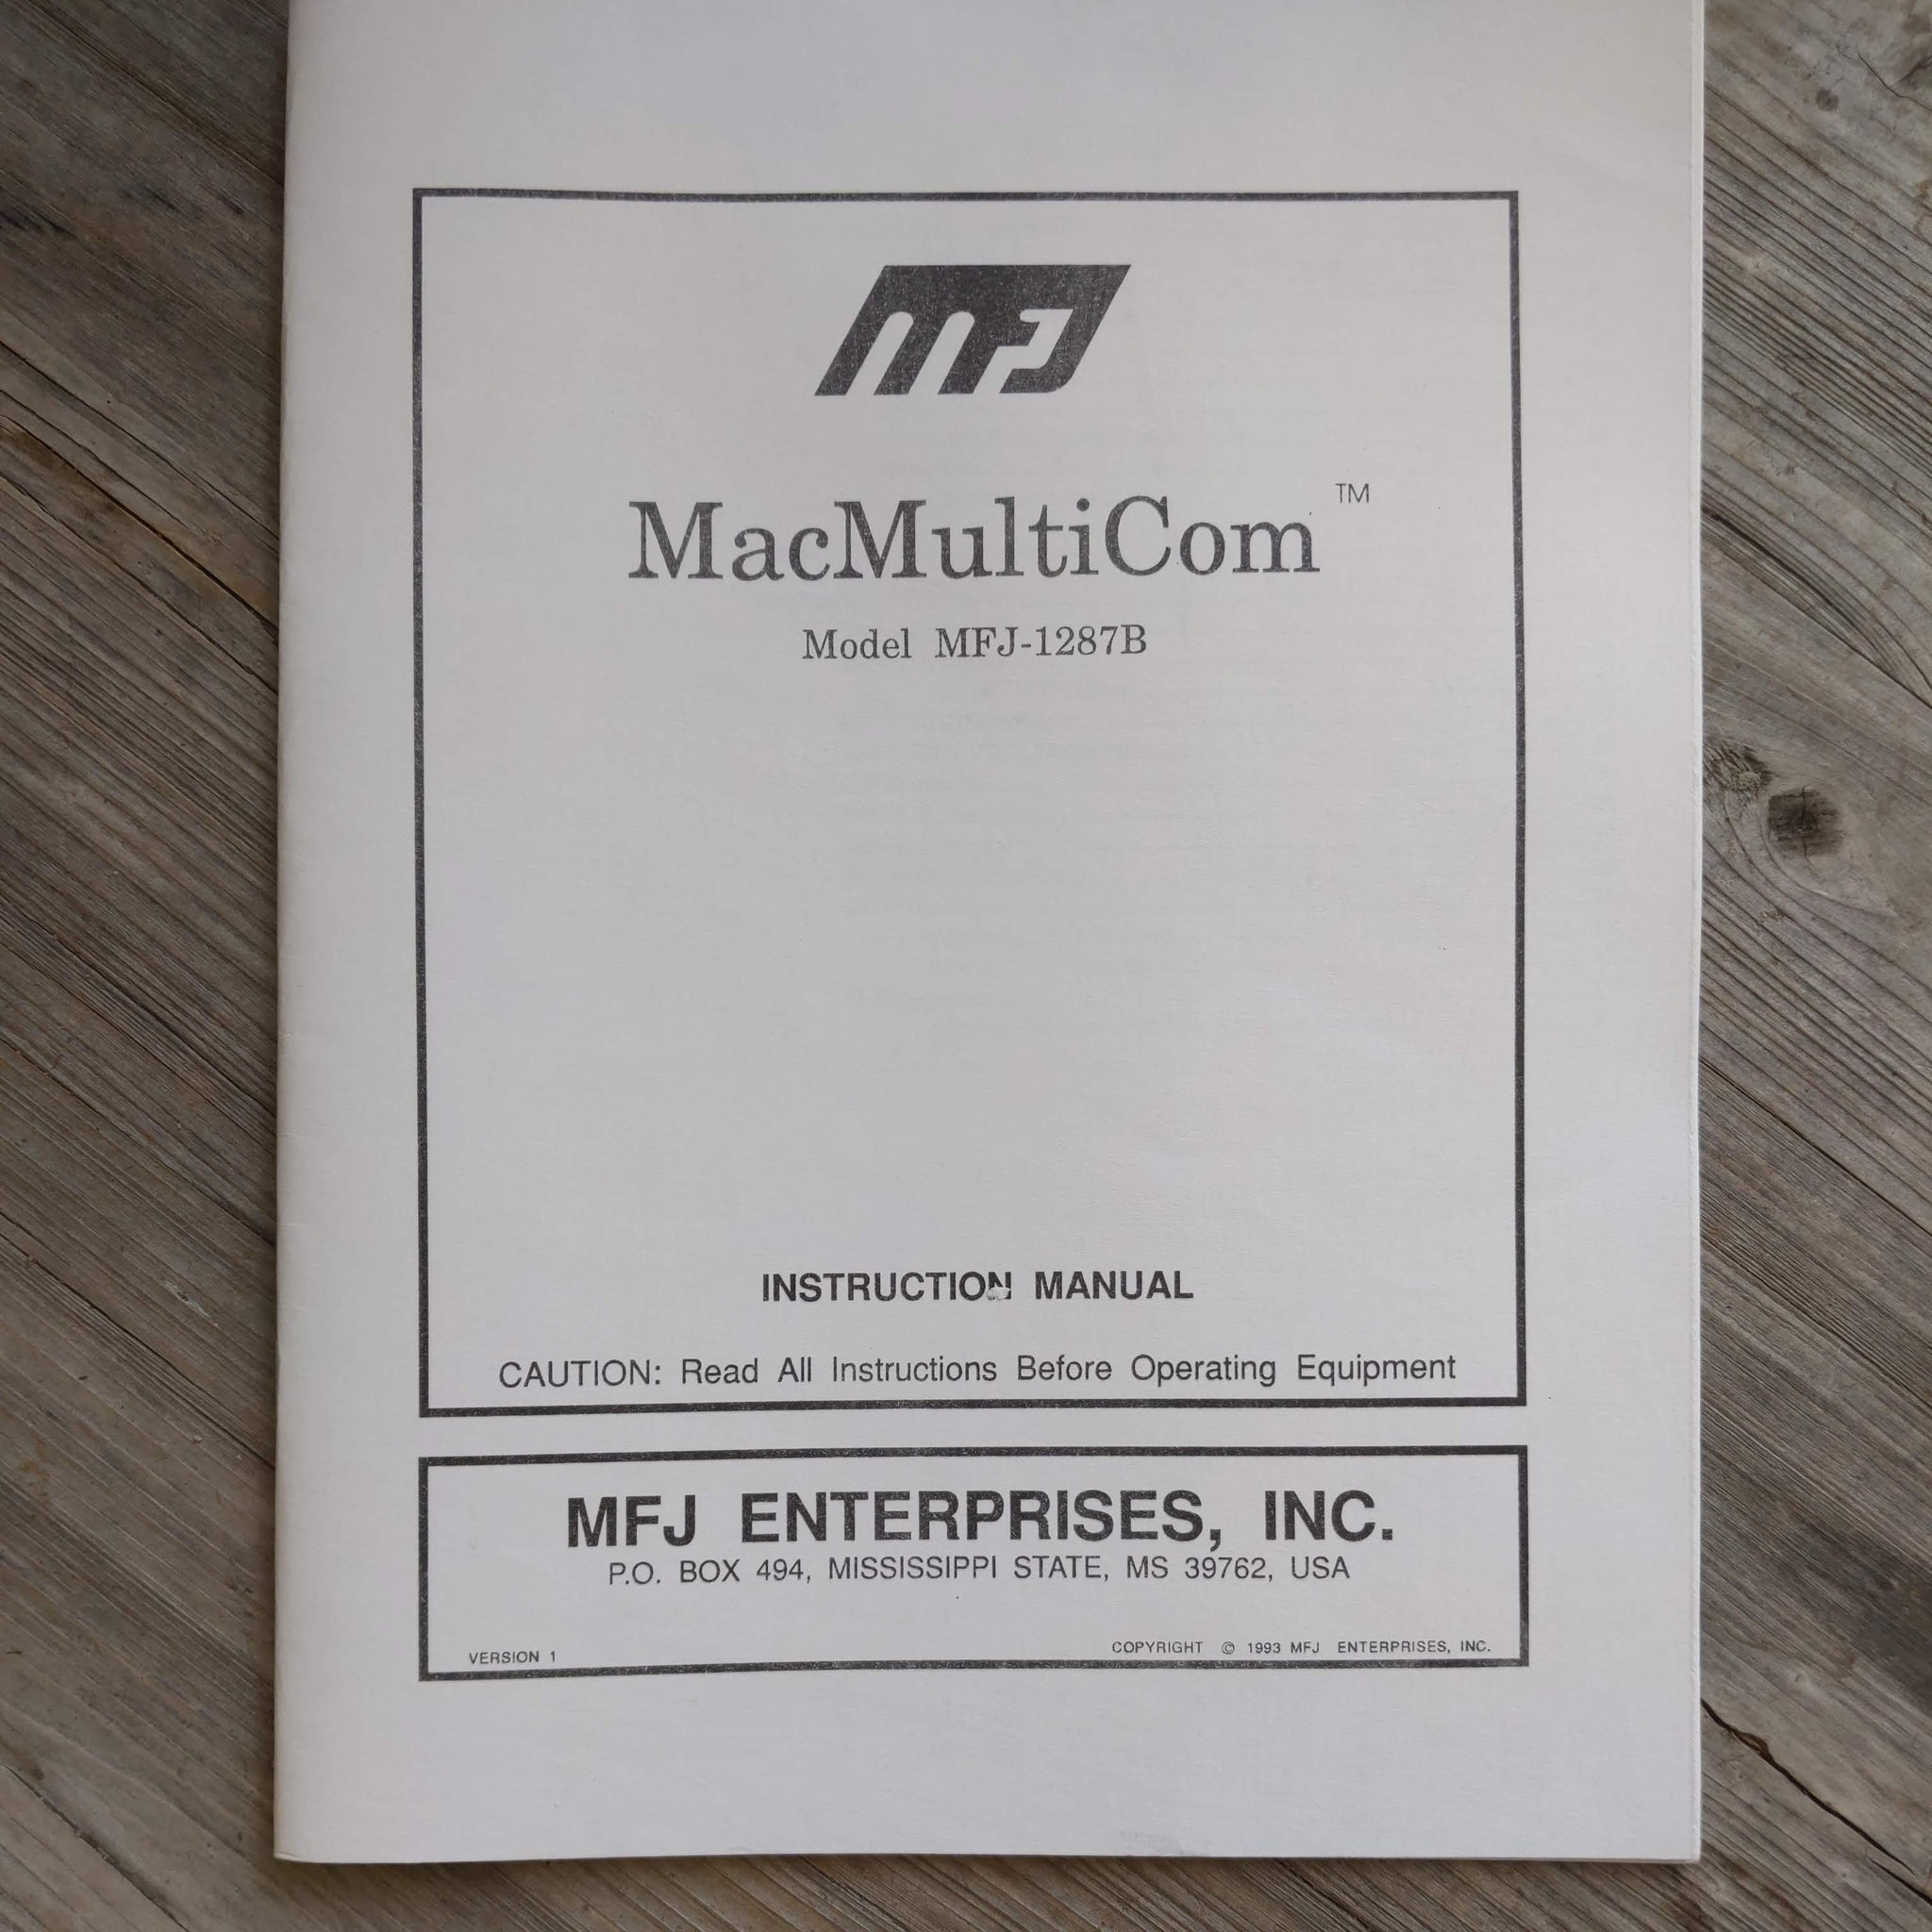 MFJ-1287B Mac Multi Com Manual